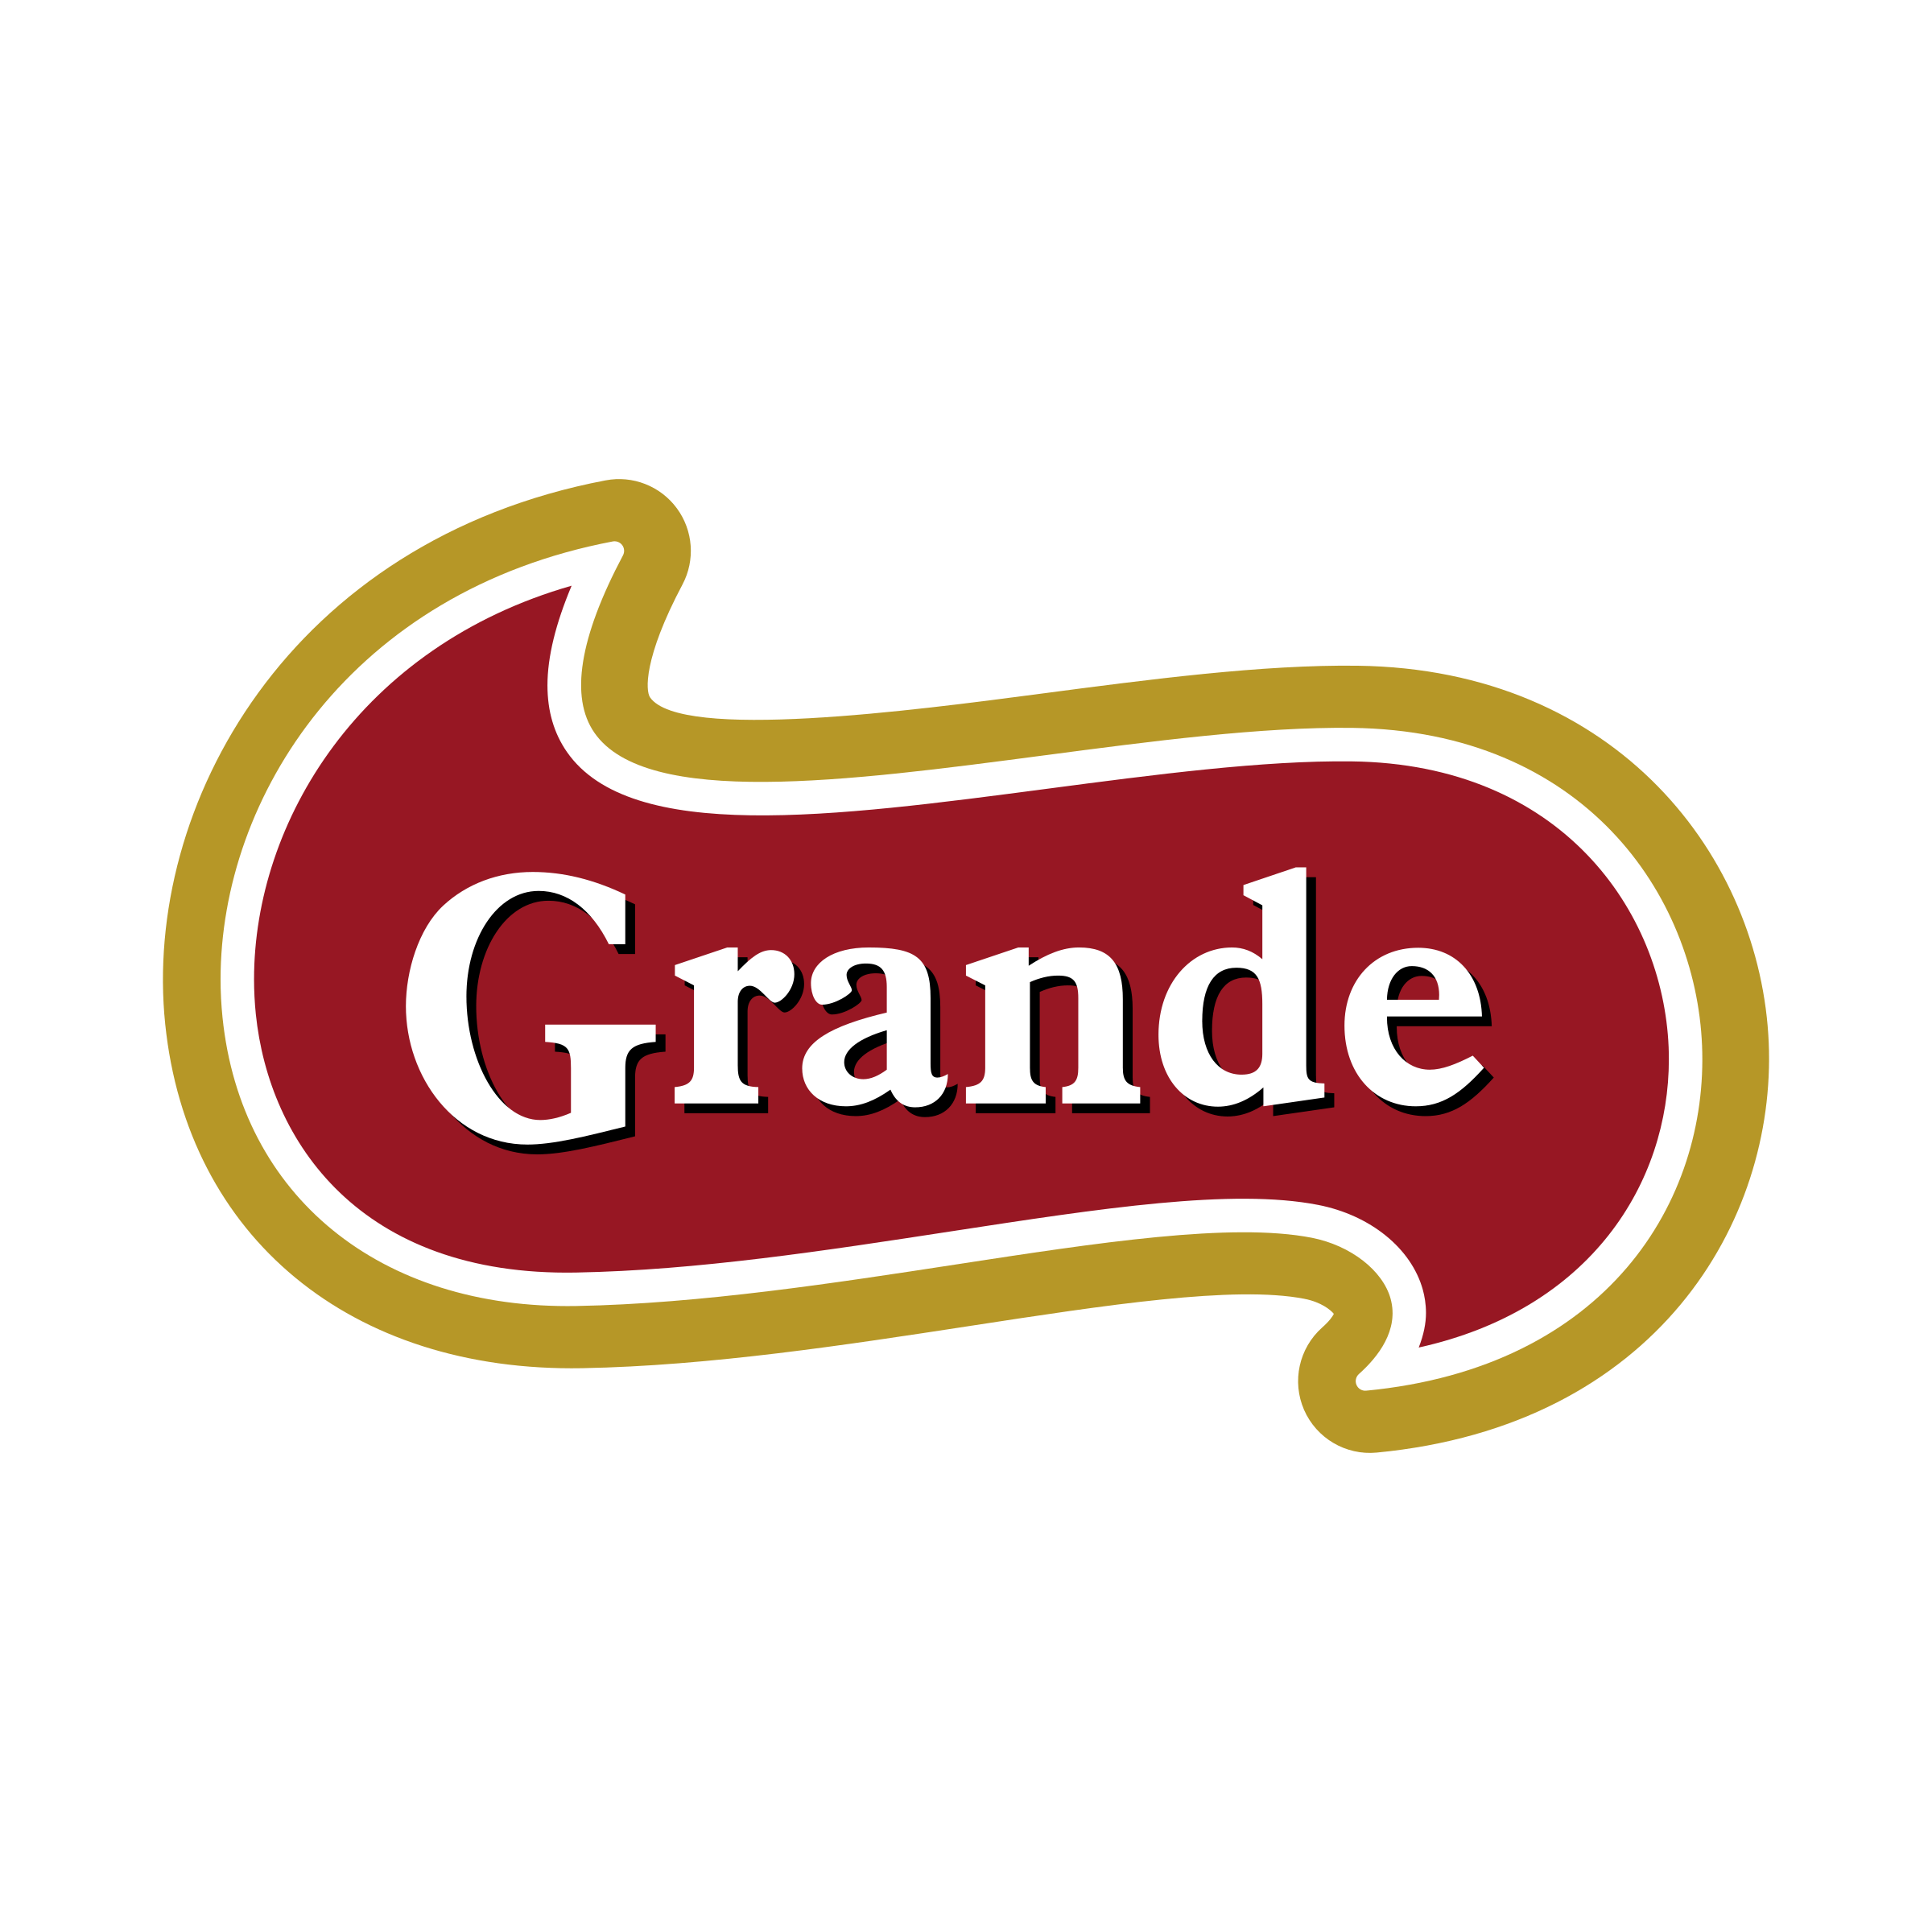 Kaufland Logo - Grande Kaufland Logo PNG Transparent & SVG Vector - Freebie Supply